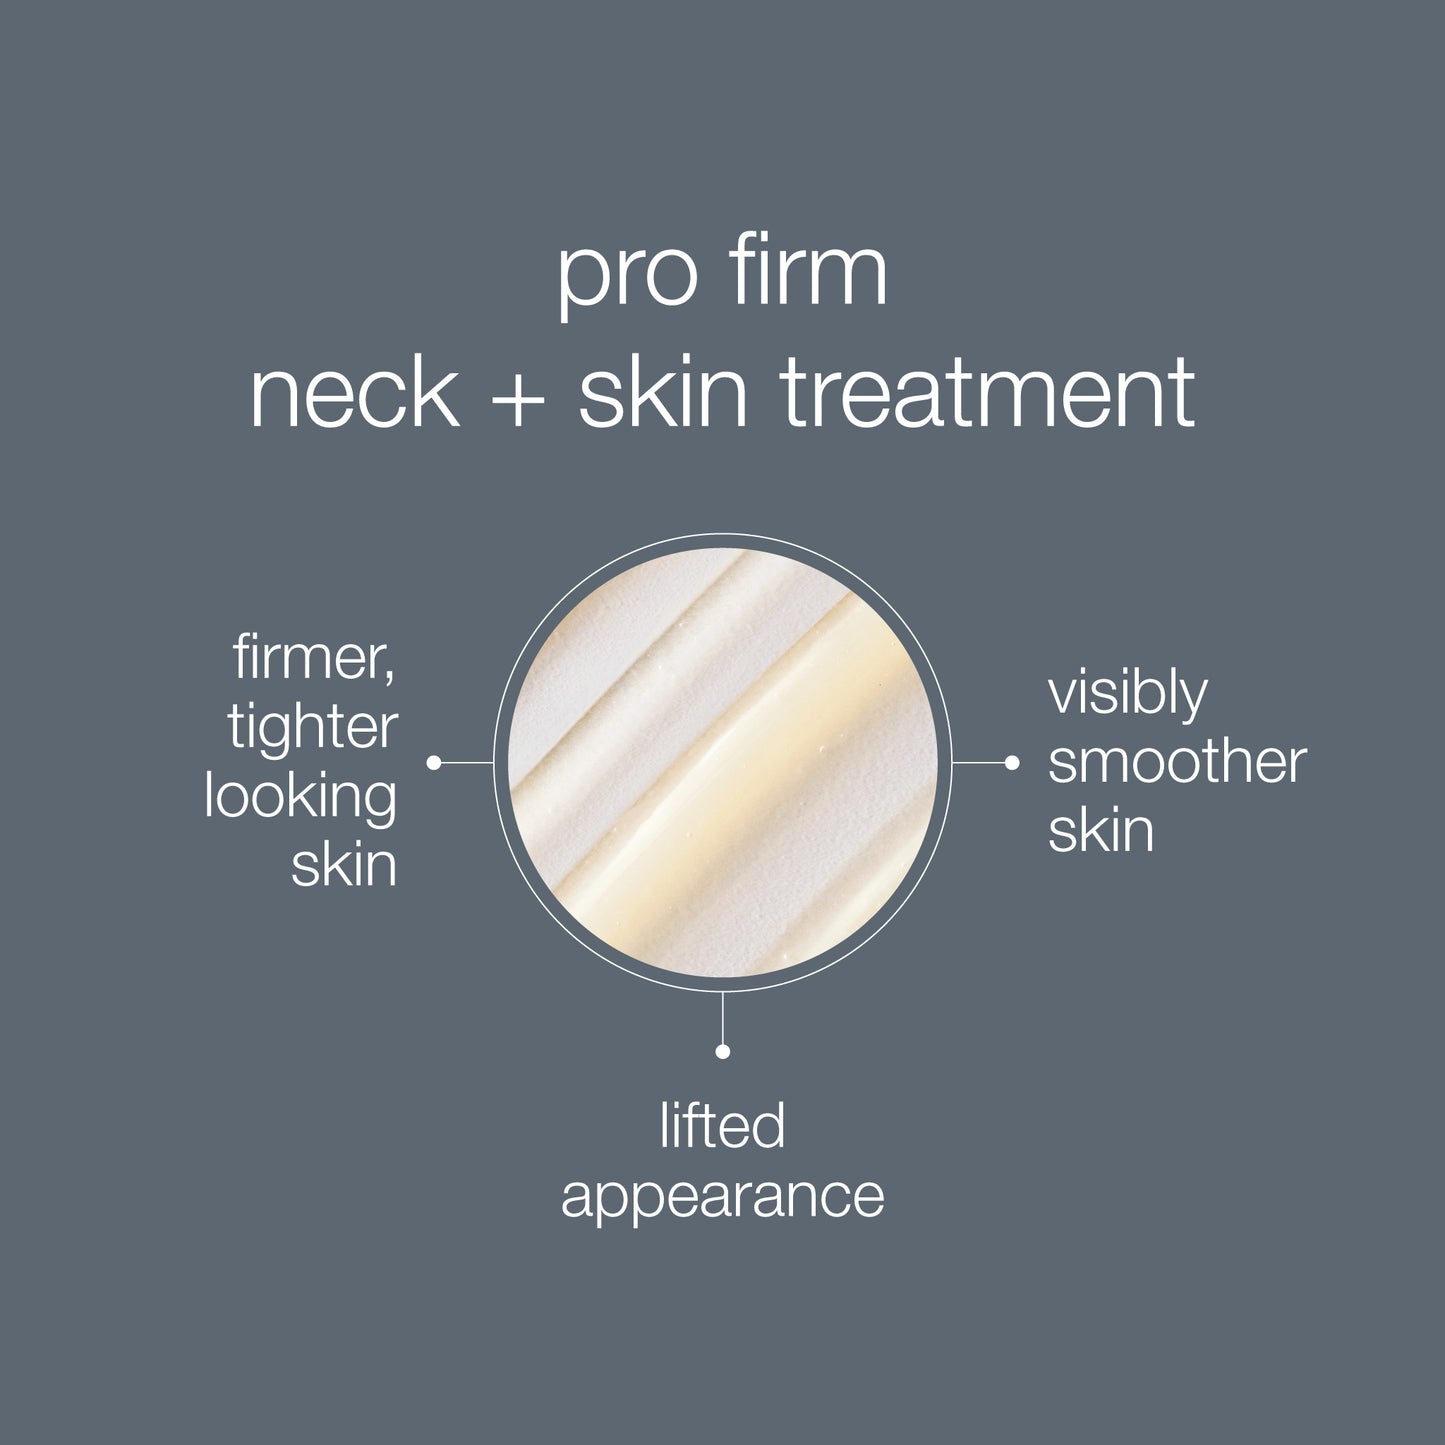 pro firm neck + skin treatment benefits